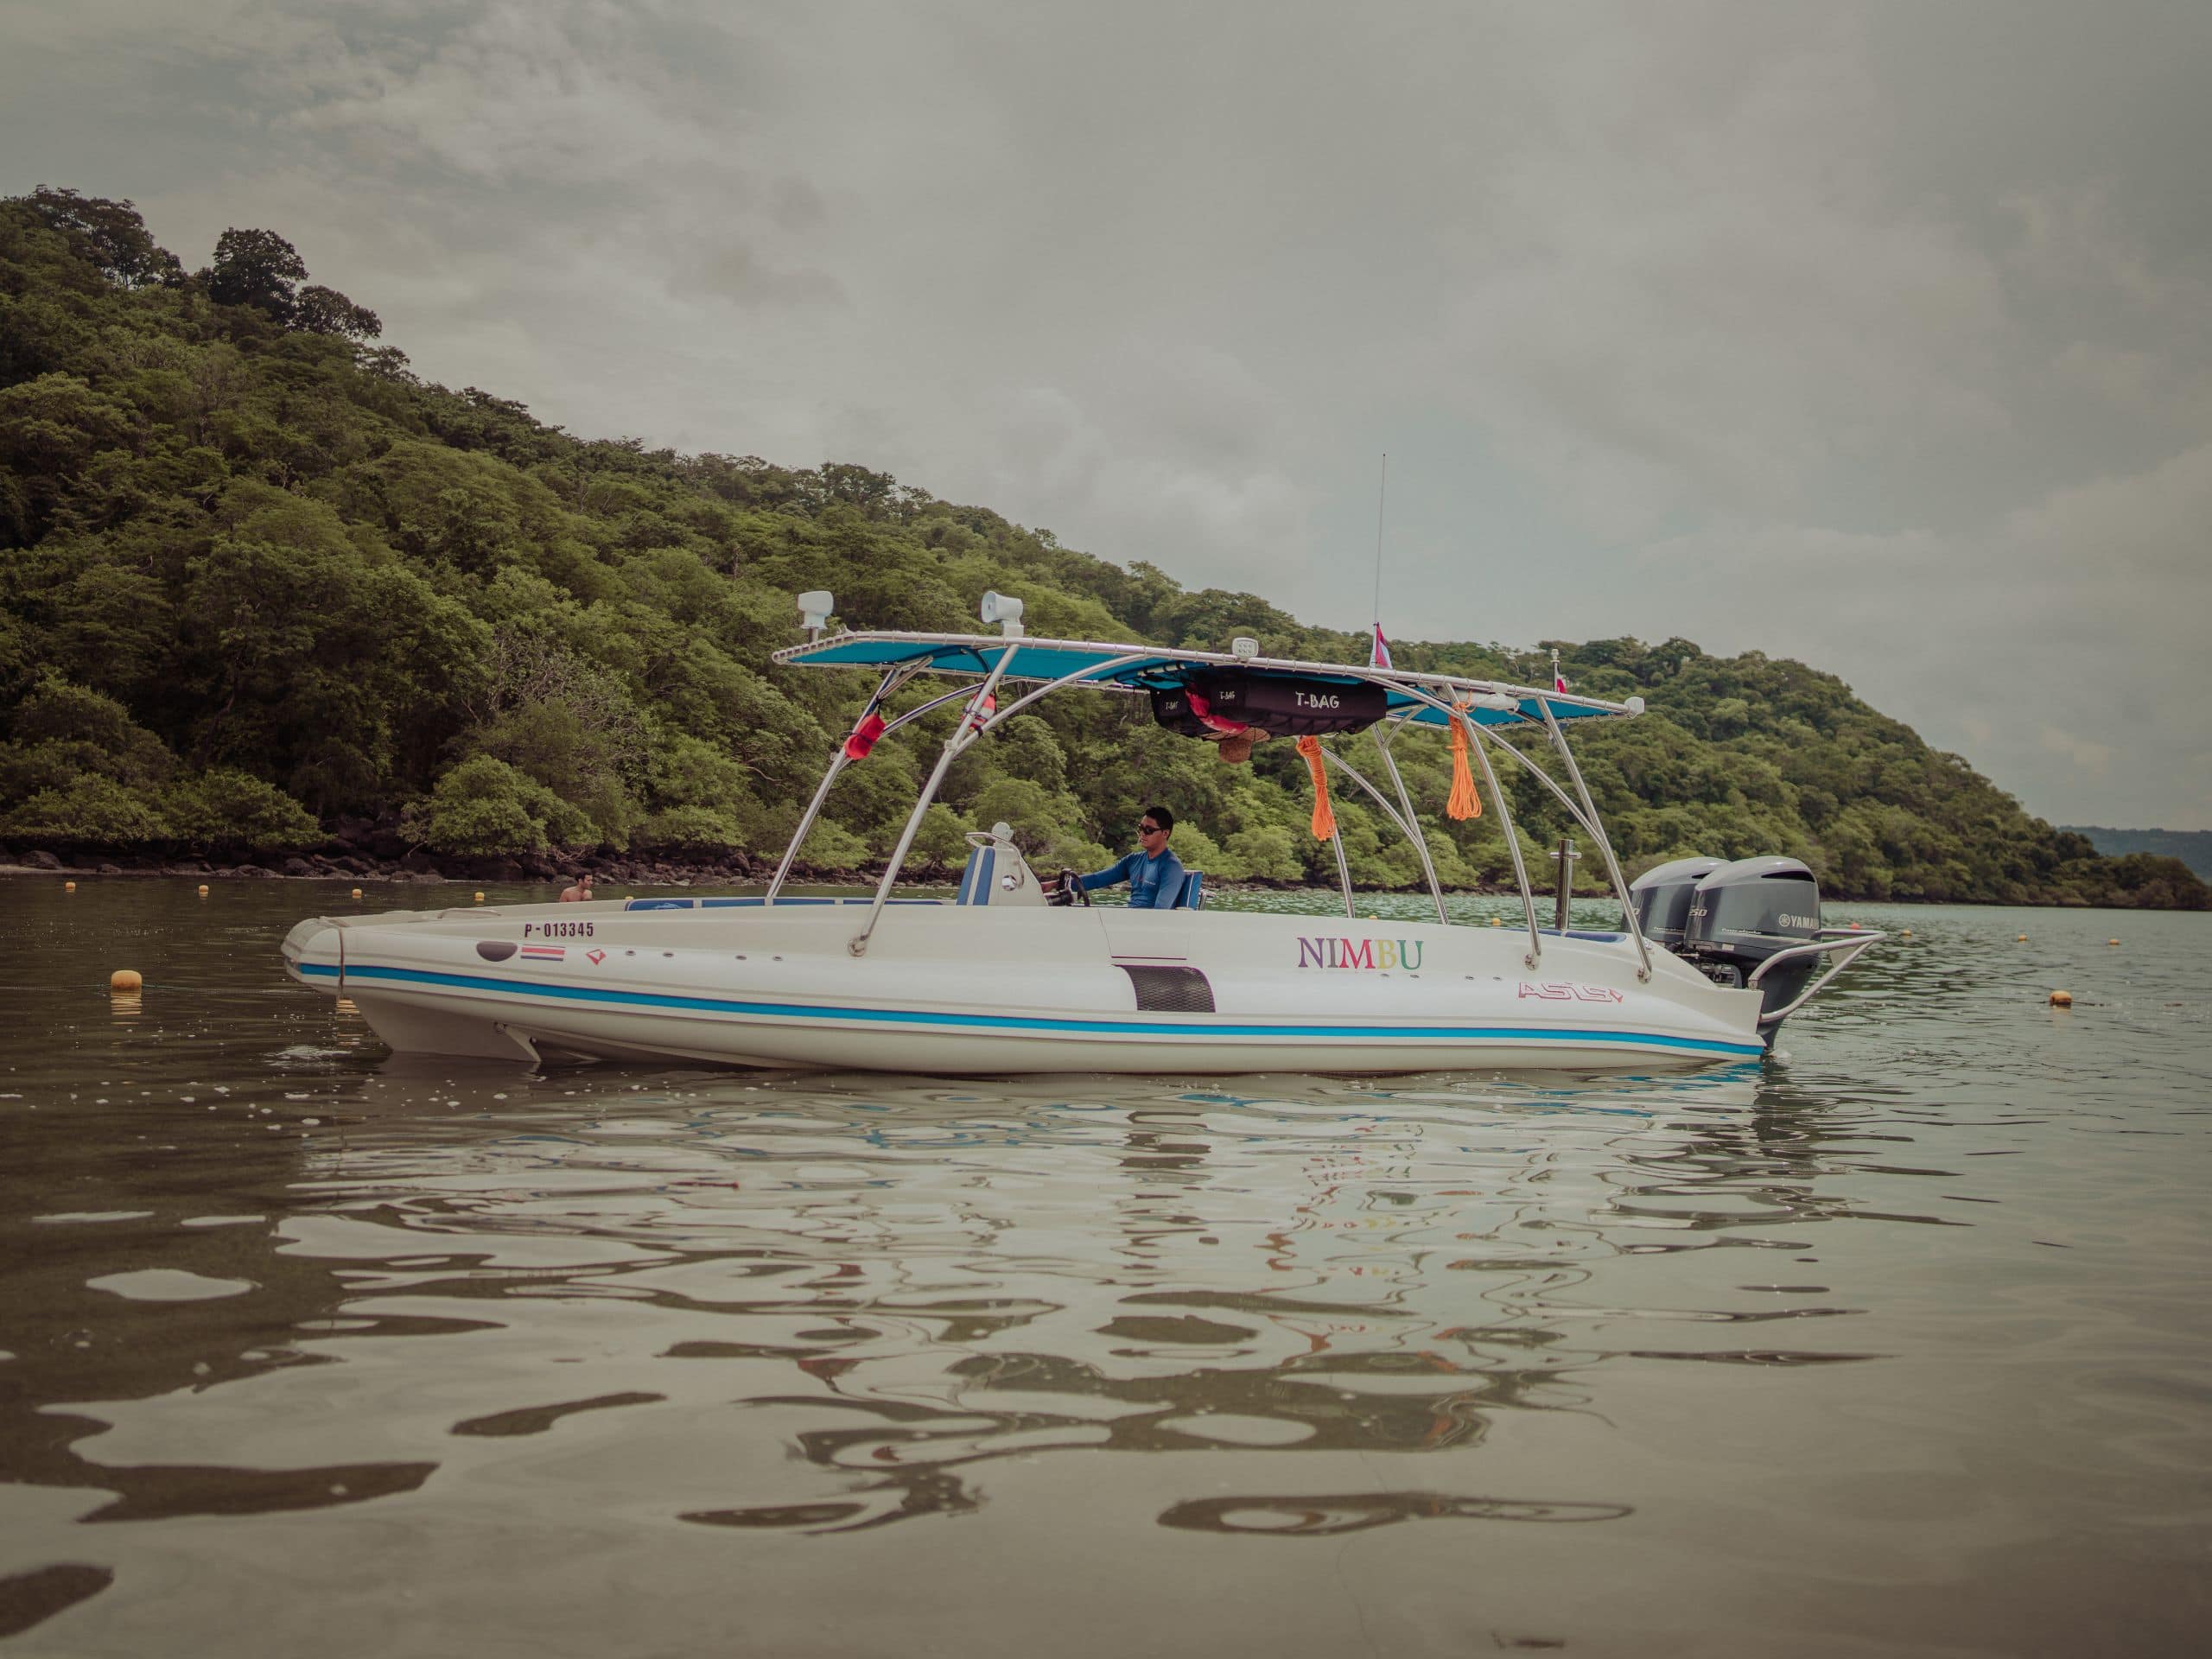 Andaz Costa Rica Resort at Peninsula Papagayo Nimbu Boat